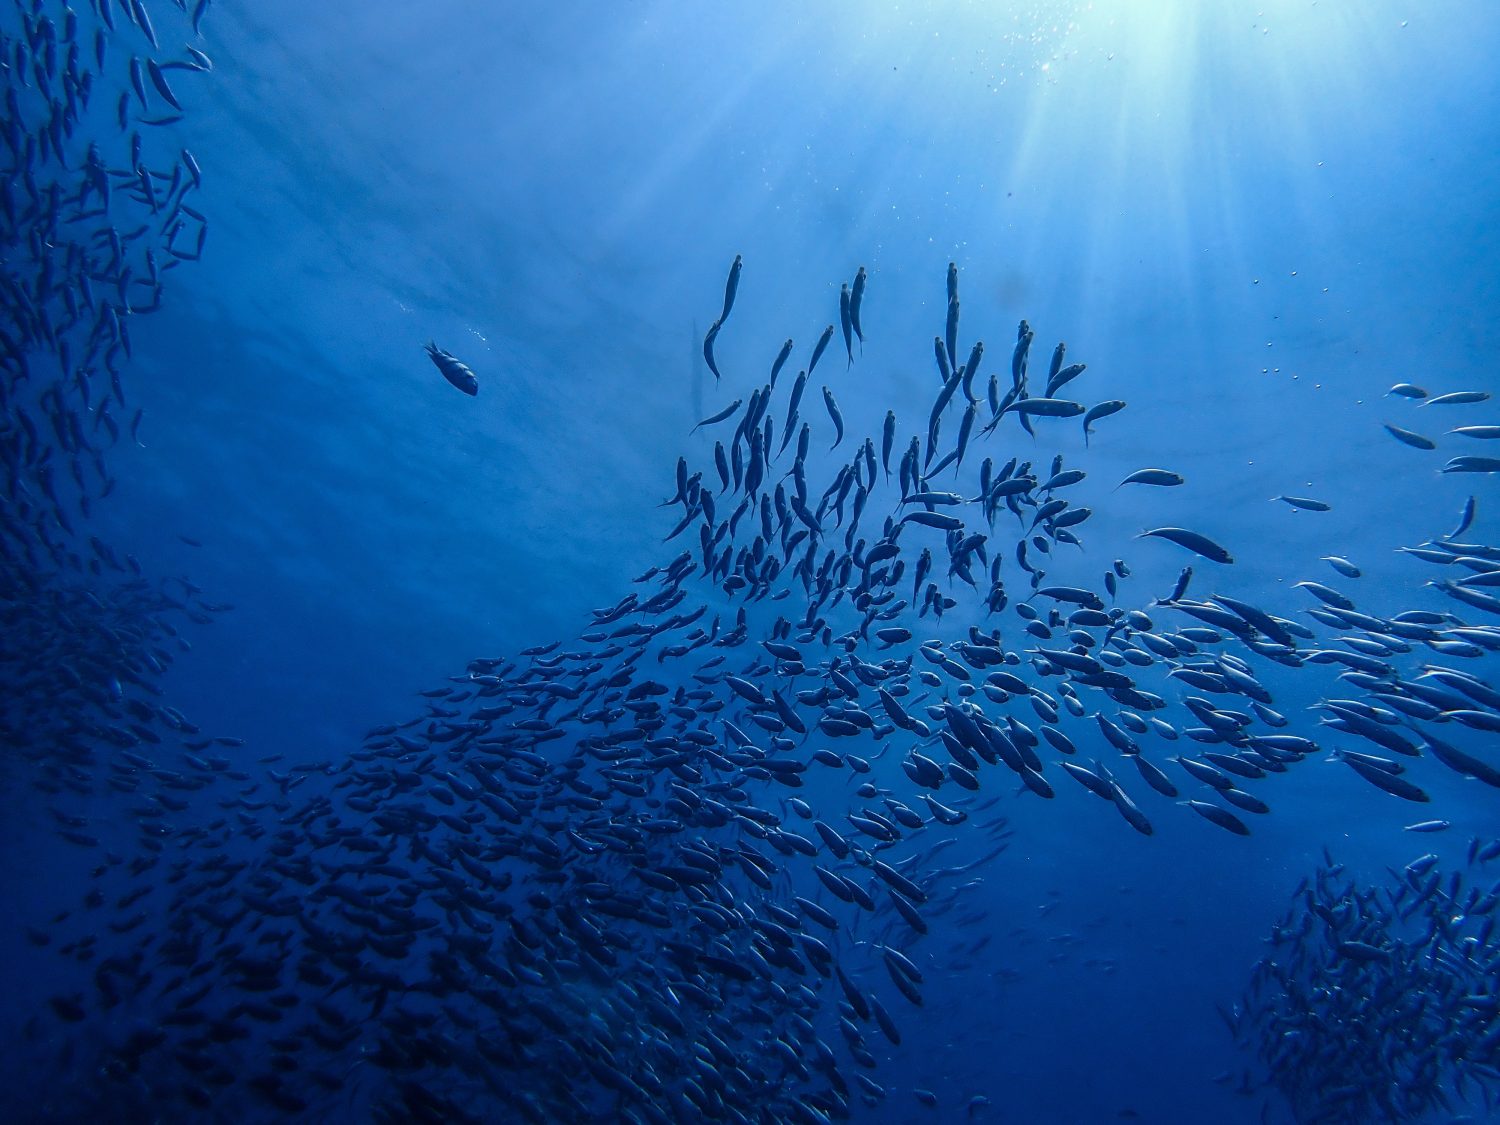 Sardine run or school of sardine swimming in the ocean with ray of sunlight.